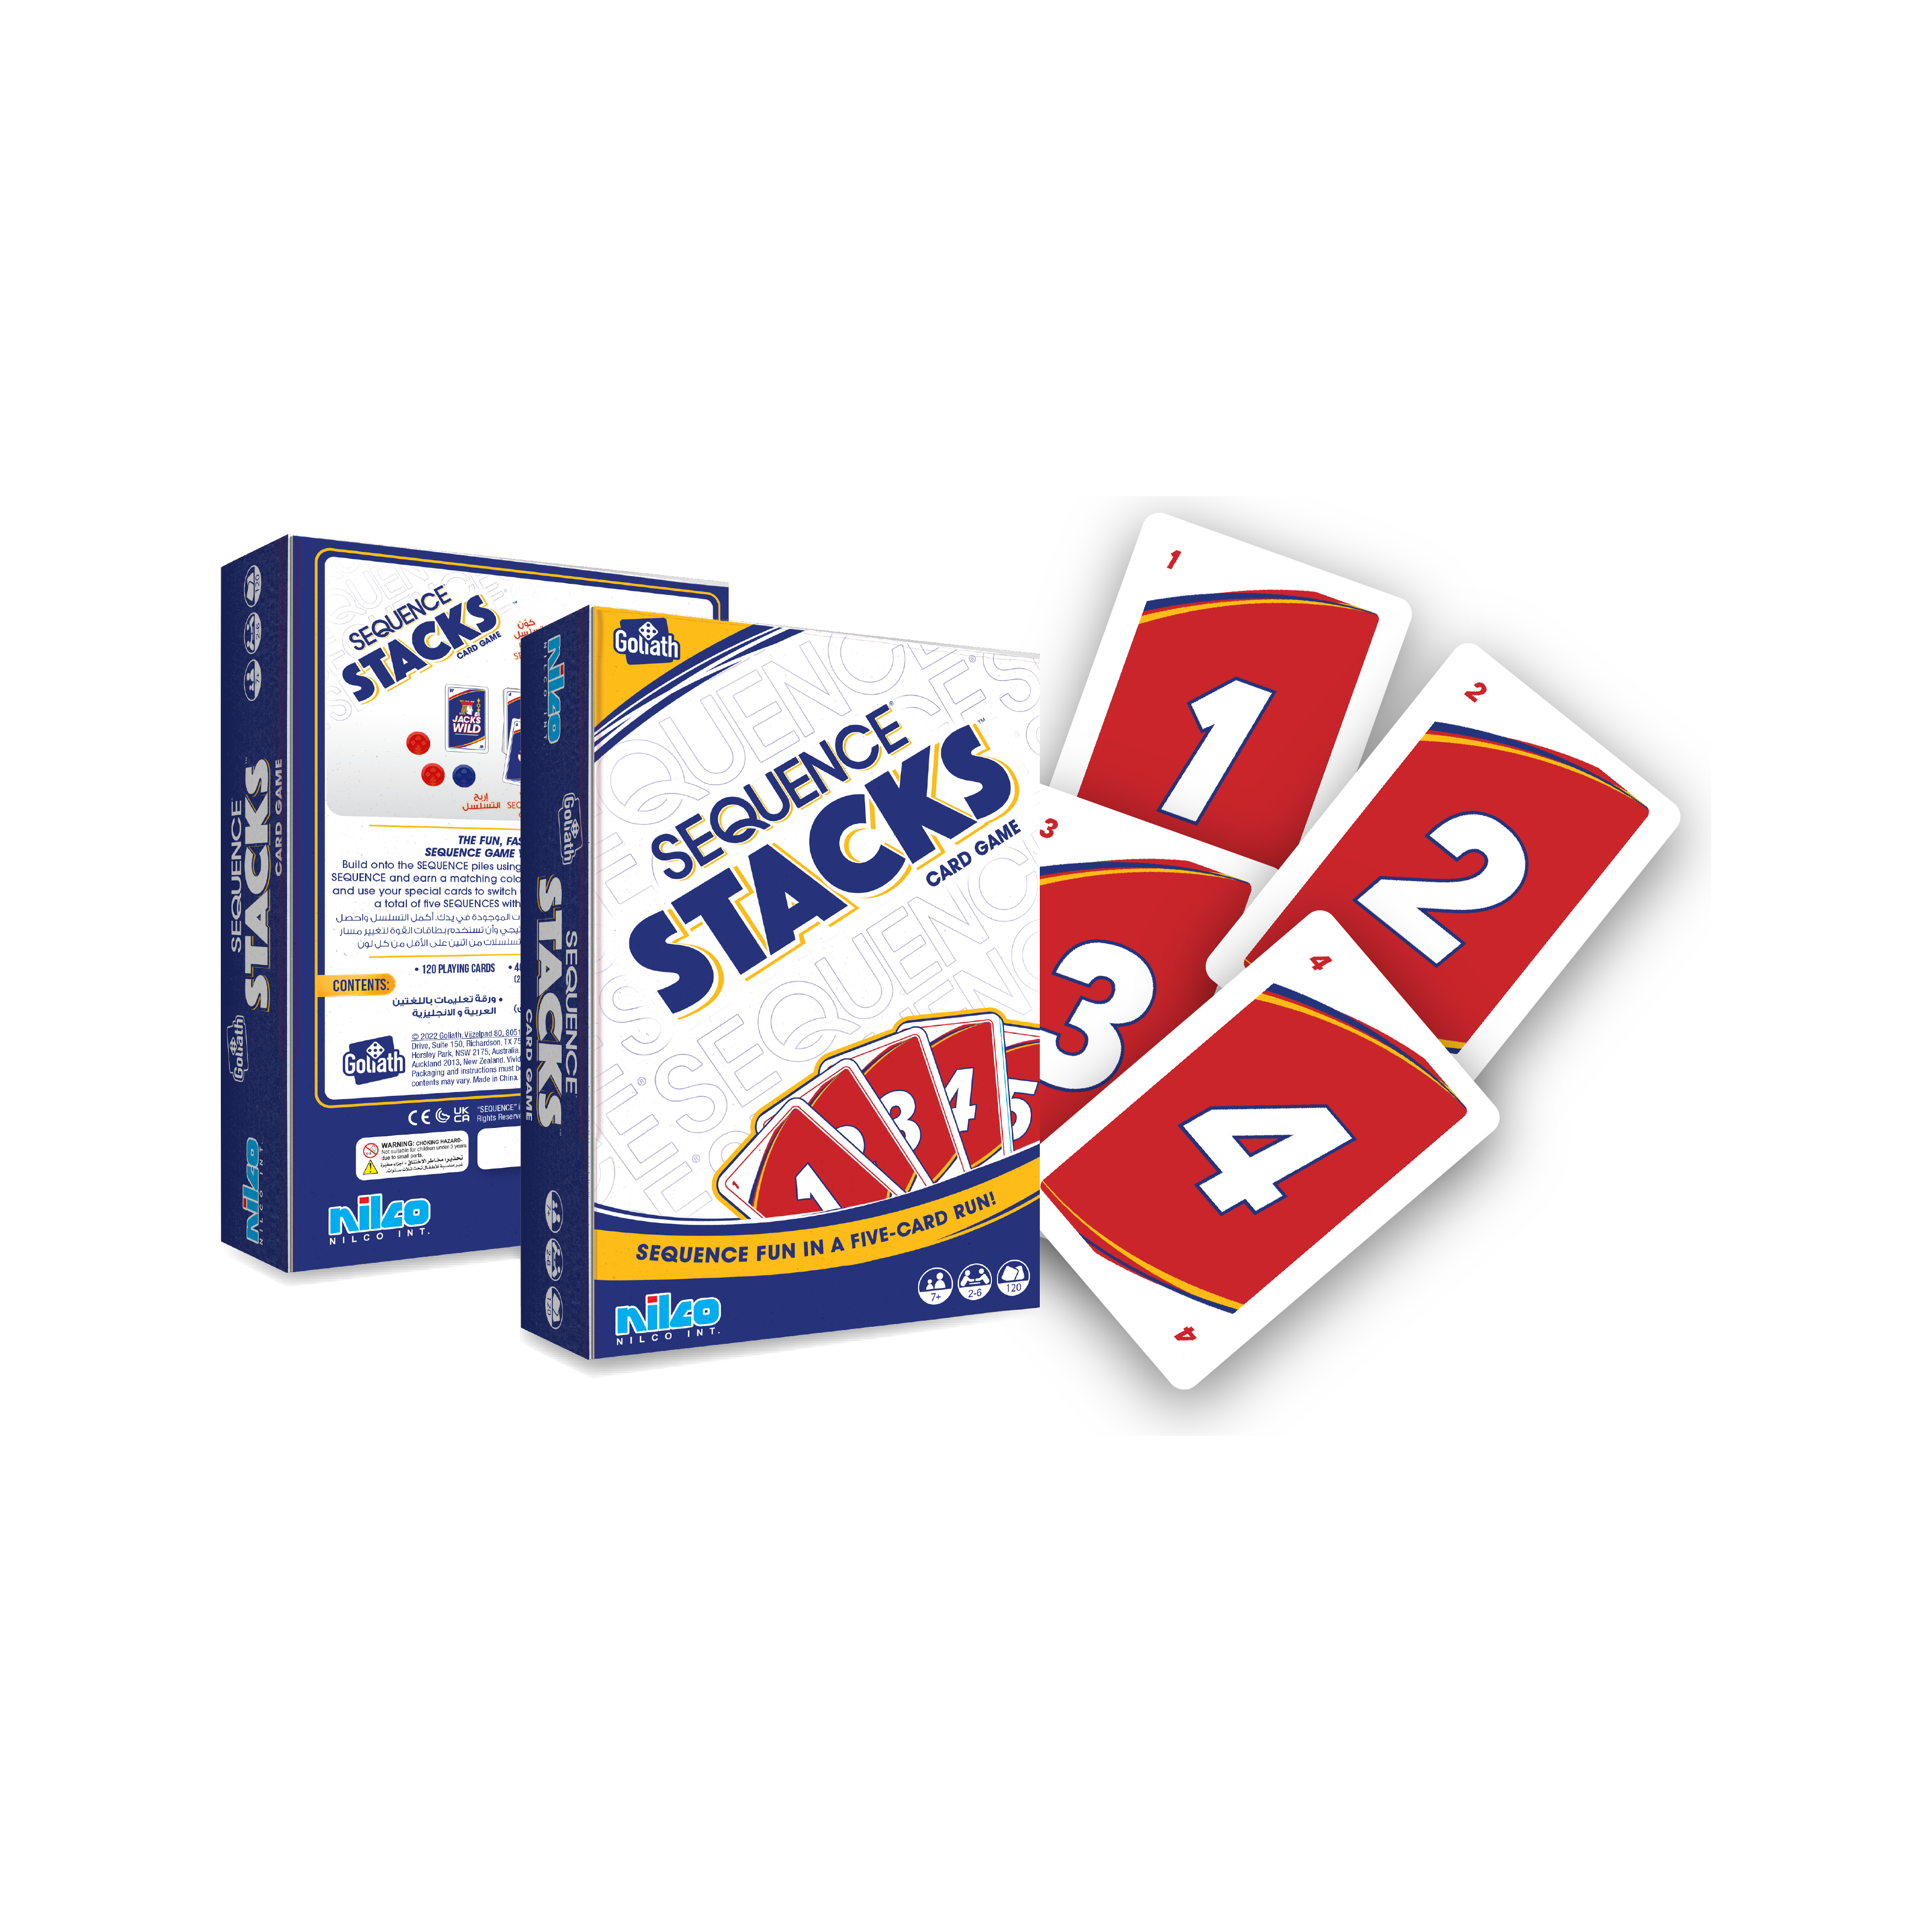 Nilco Sequence Stacks Card Game